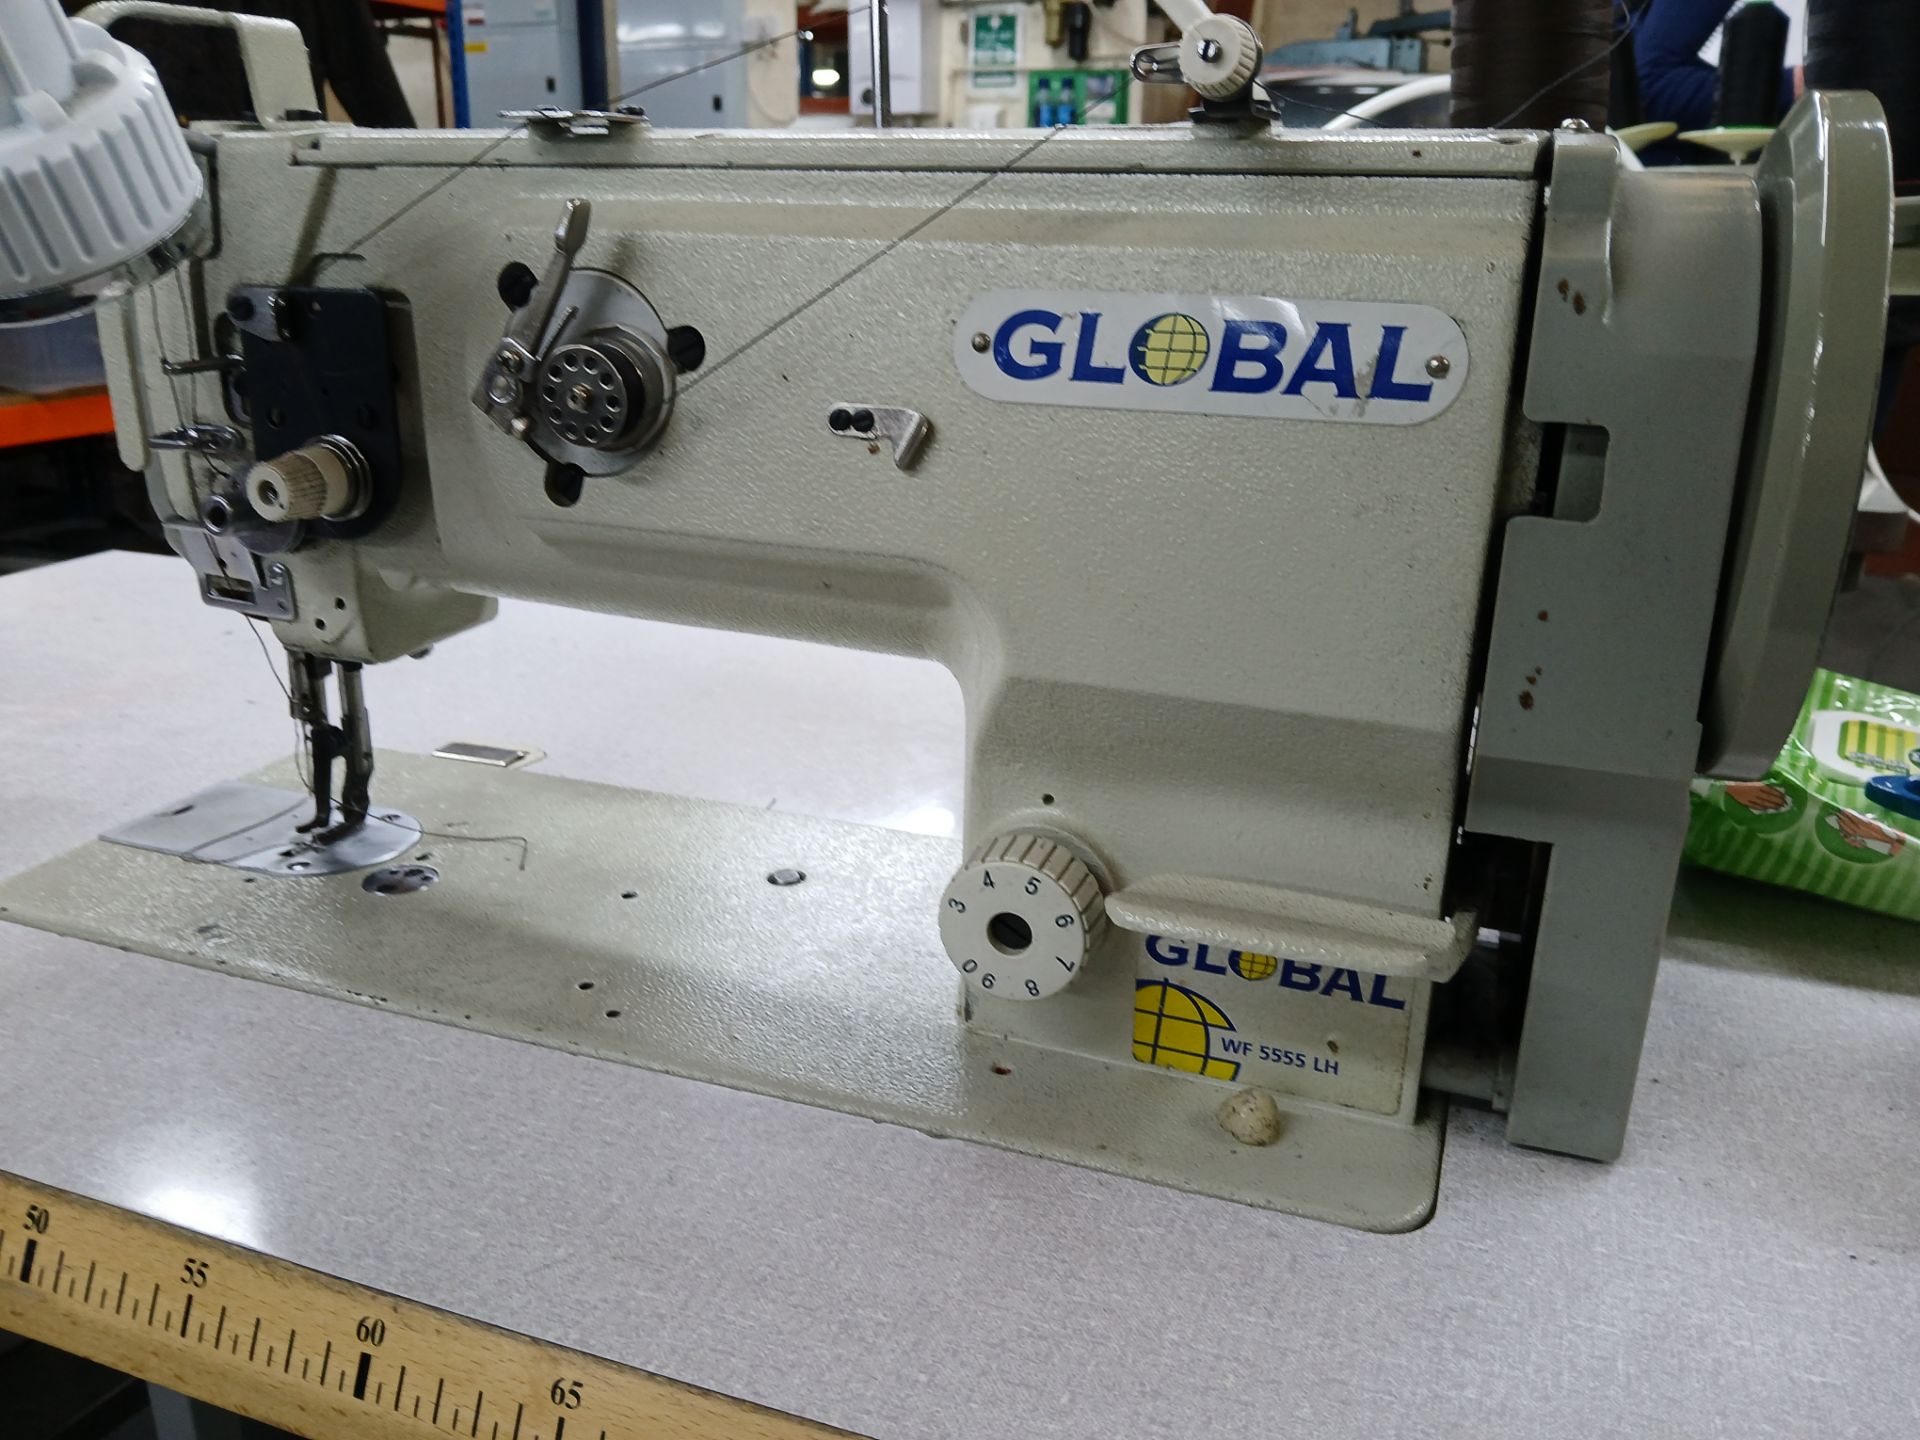 Global WF5555LH industrial sewing machine - Image 3 of 3